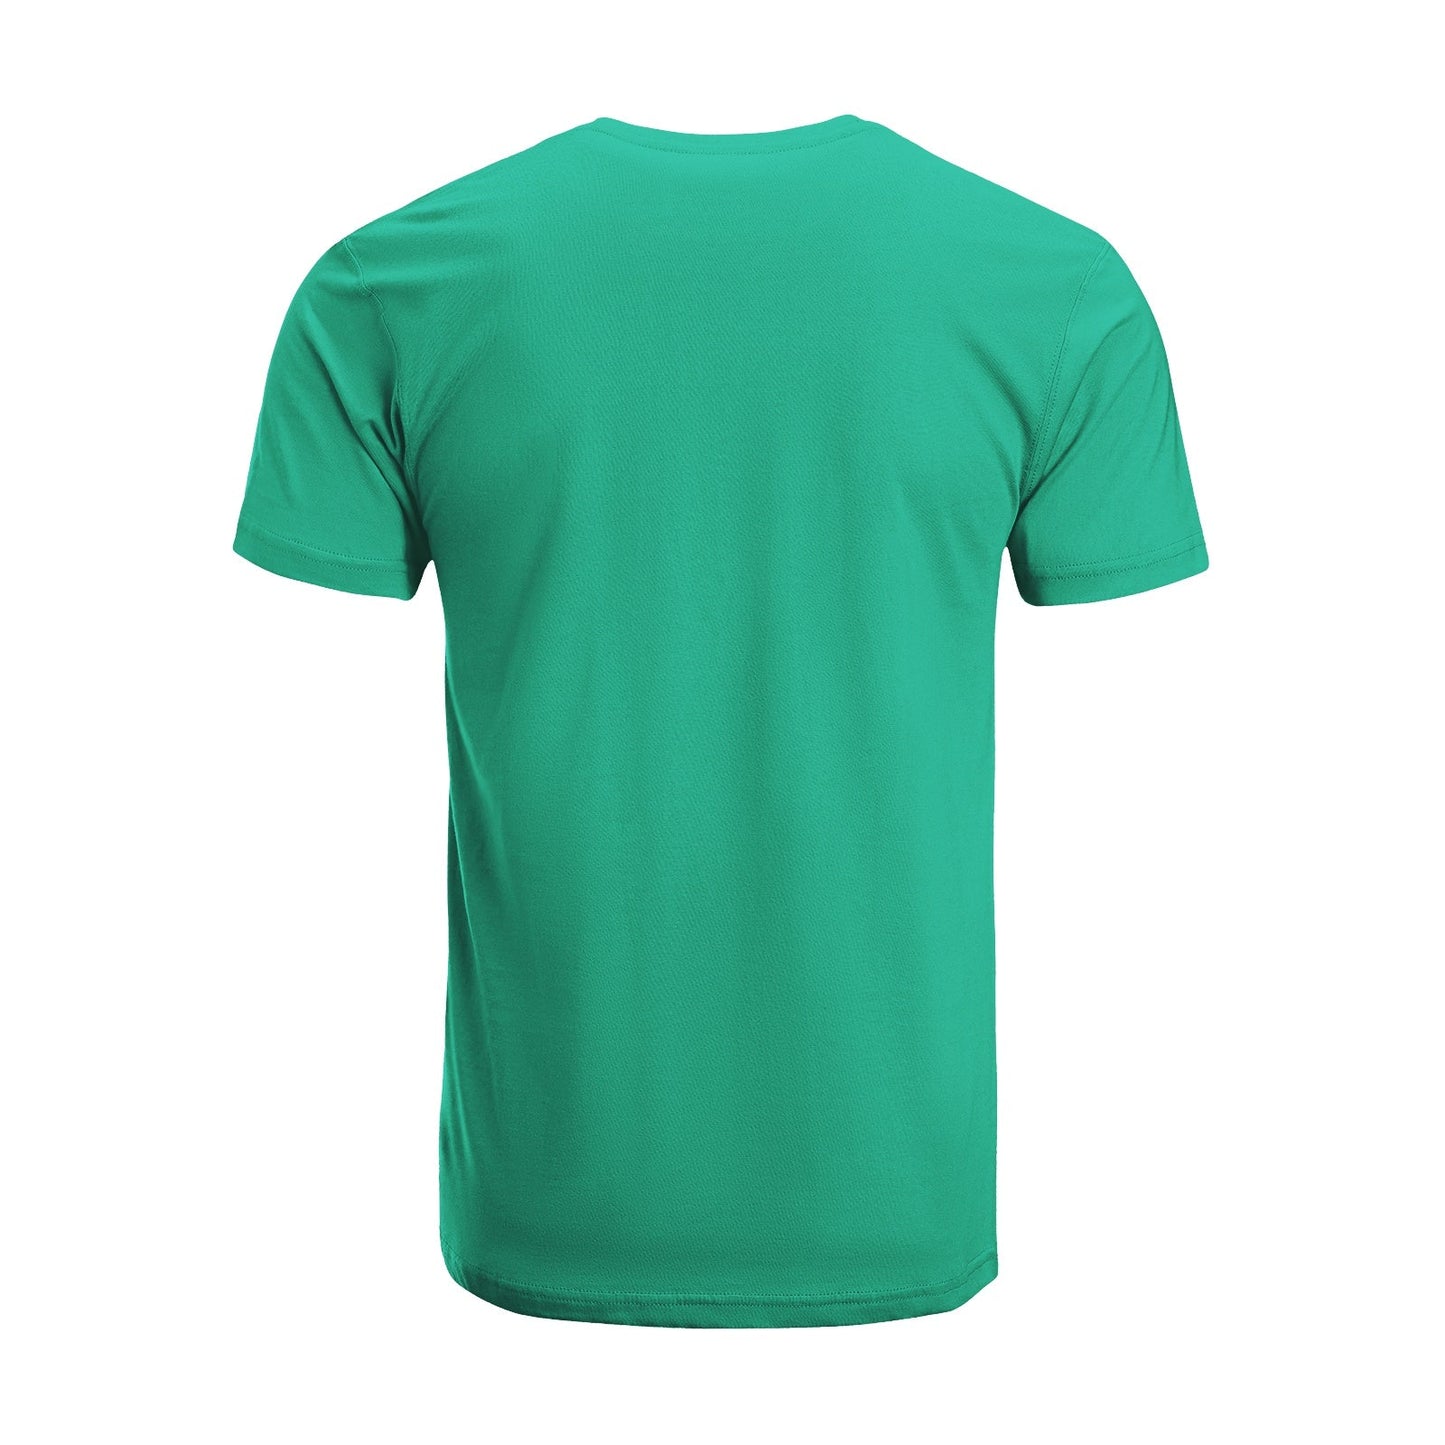 Unisex Short Sleeve Crew Neck Cotton Jersey T-Shirt VEGAN 03